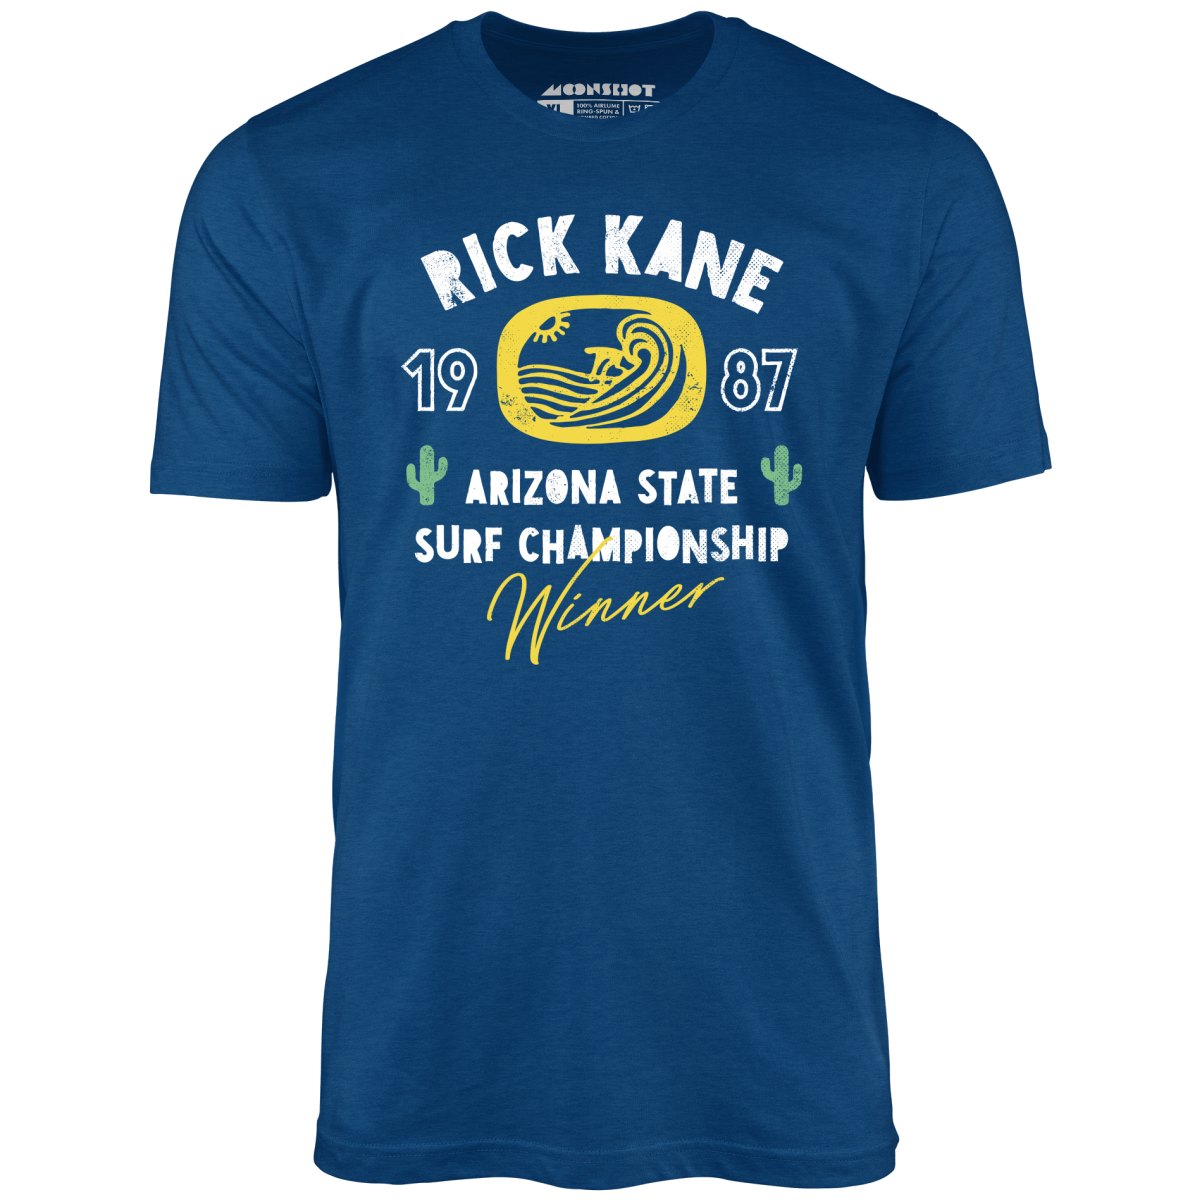 Rick Kane - Arizona State Surf Championship - Unisex T-Shirt